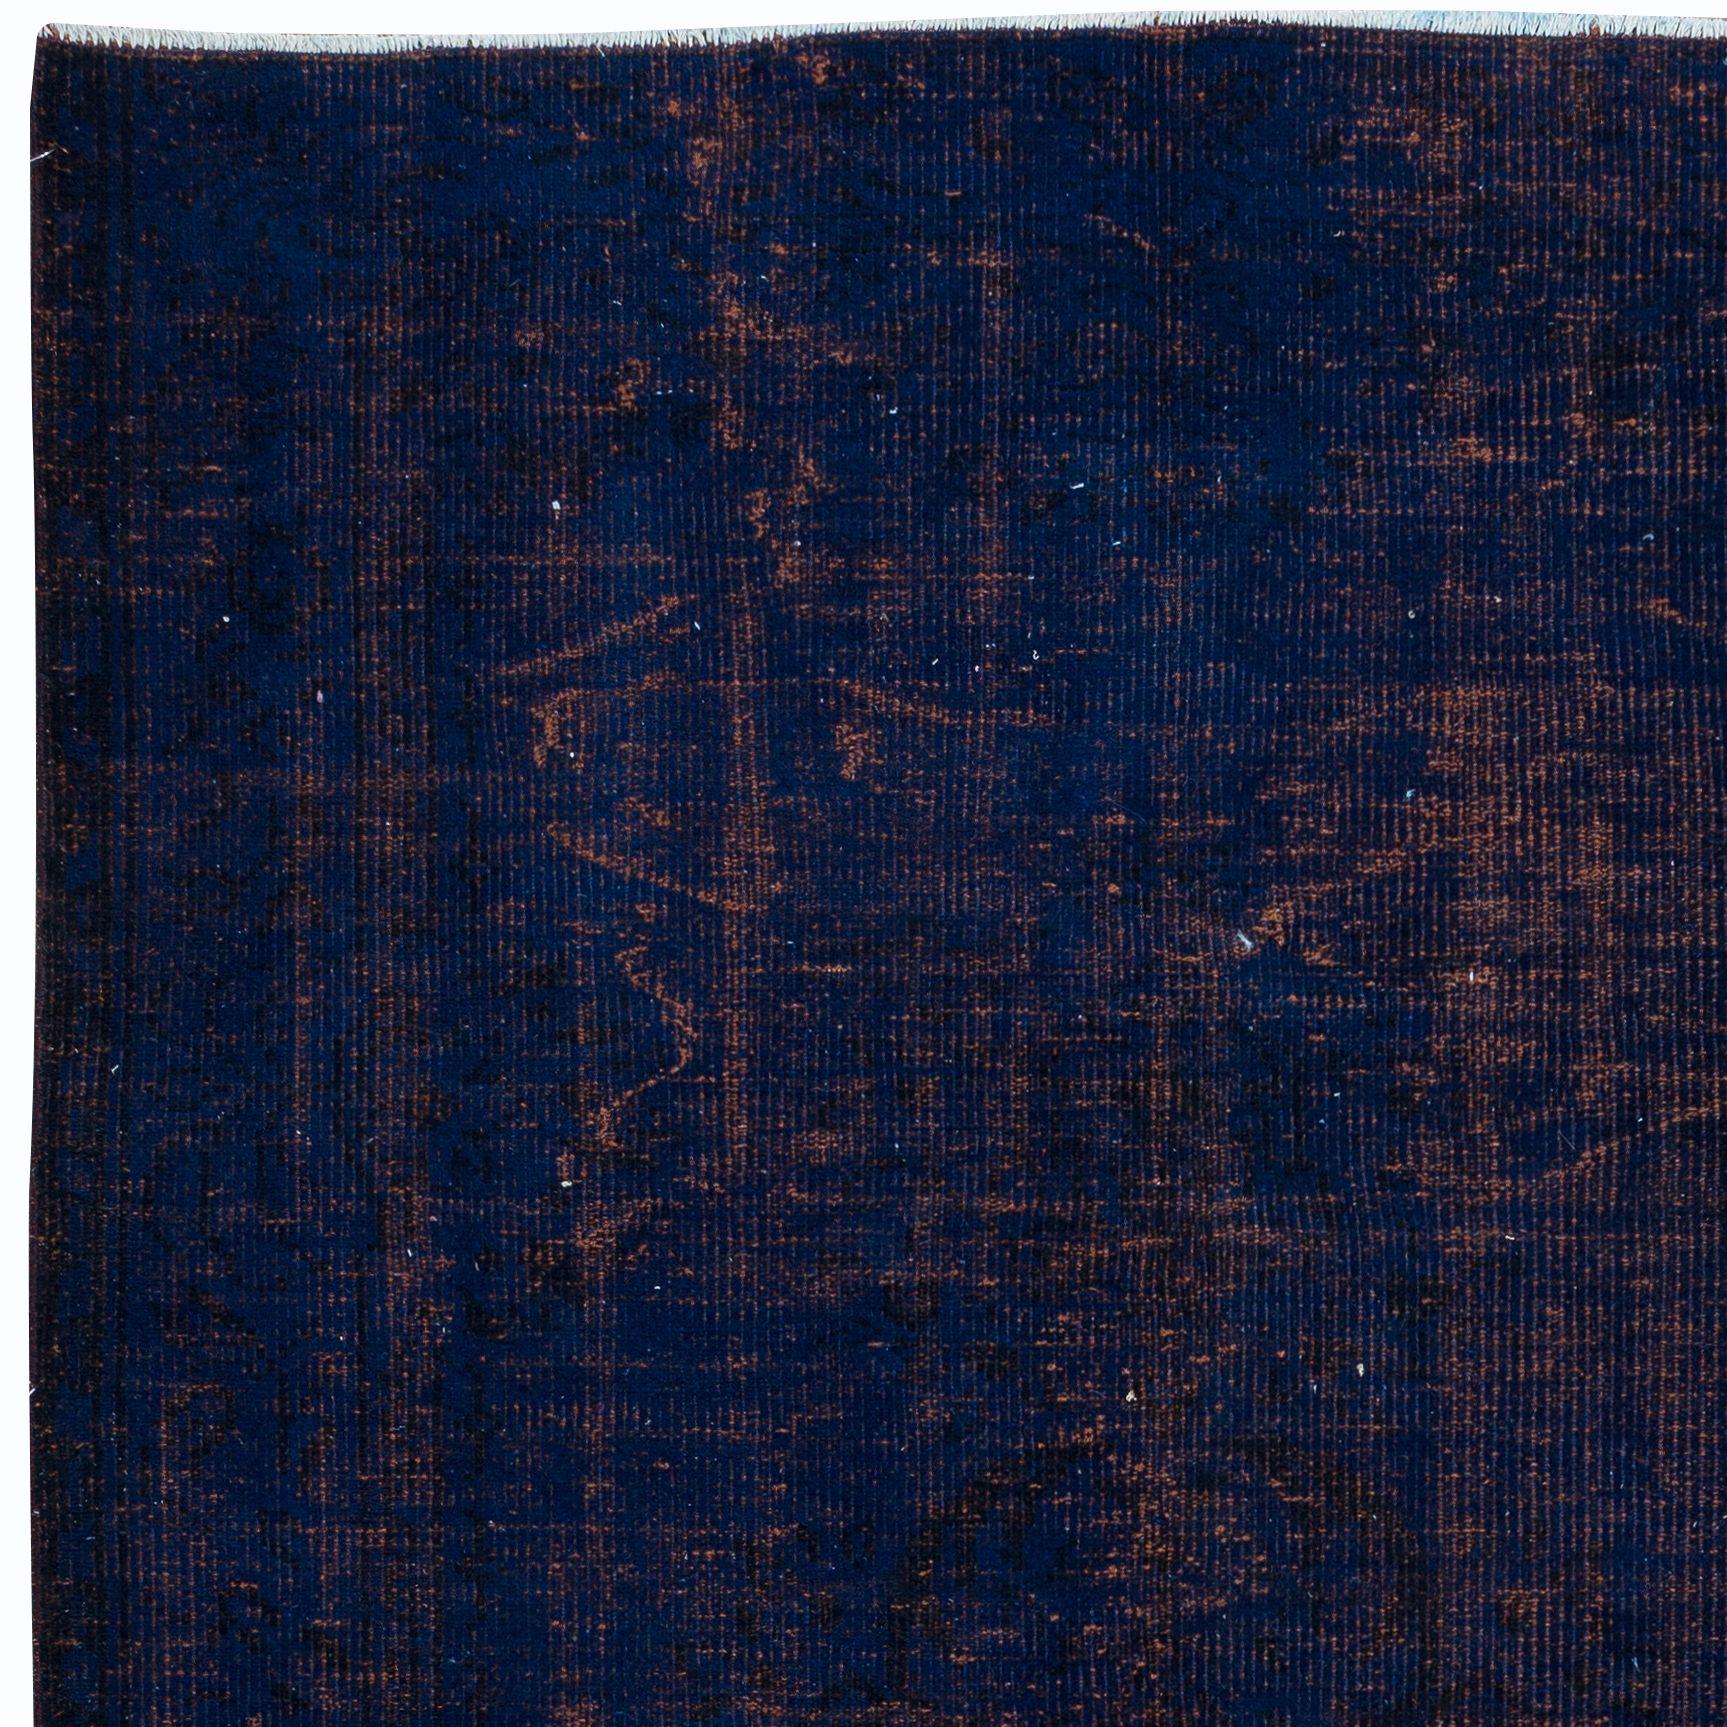 Hand-Woven 5.3x8.3 Ft Handmade Navy Blue Rug, Modern Turkish Carpet in Ultramarine Blue For Sale